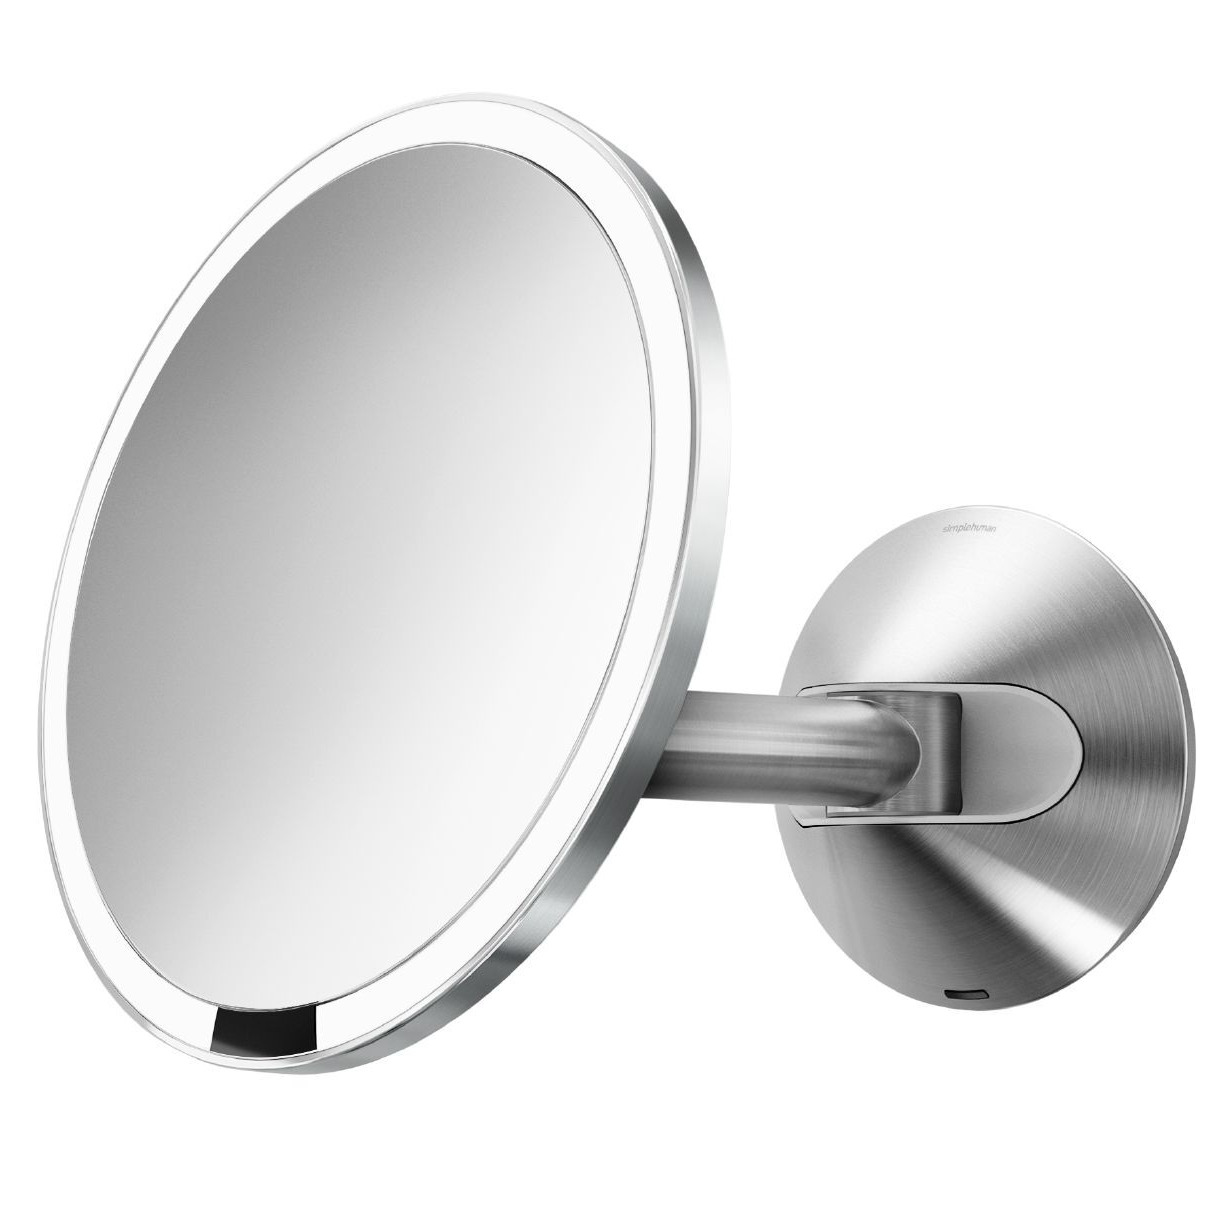 simplehuman Wall Mounted Bathroom Sensor Beauty Mirror - image 1